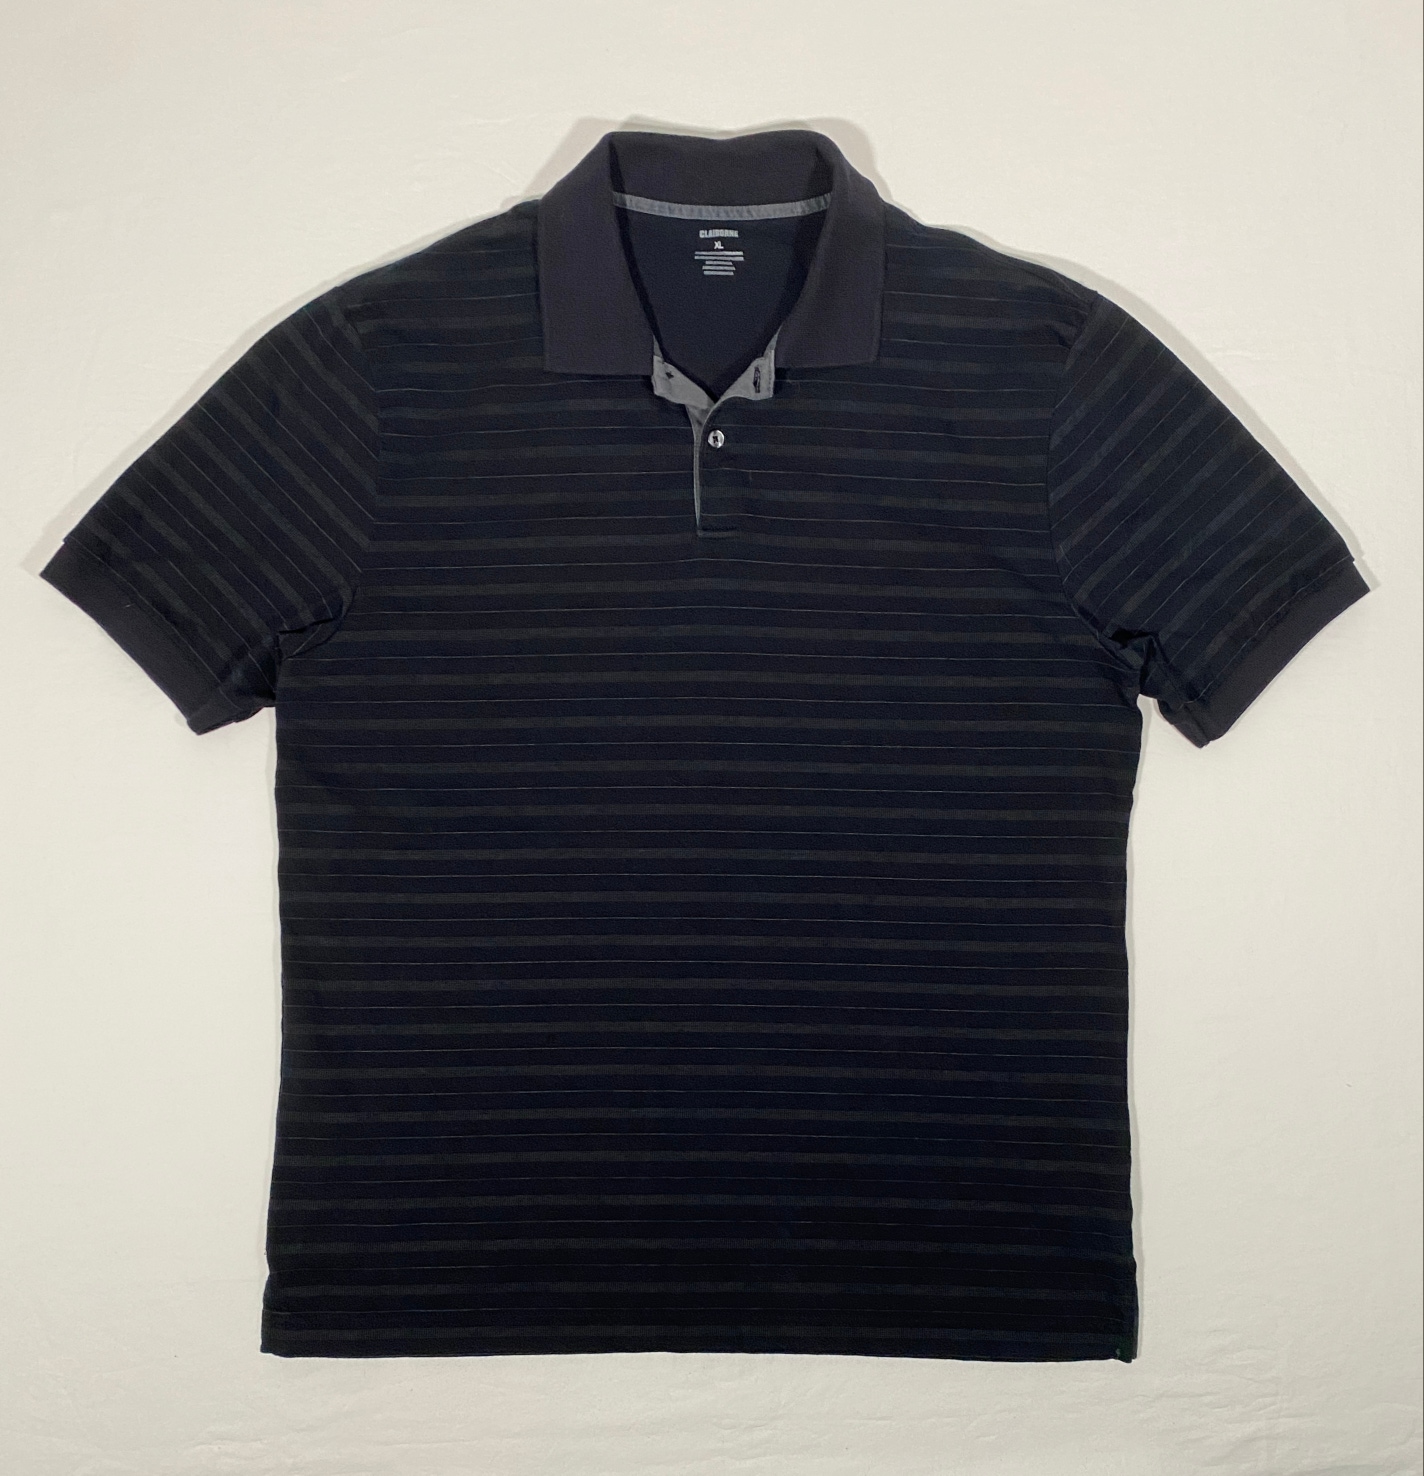 Claiborne Men's Size XL Black Striped Pima Cotton Blend Casual Golf Polo Shirt